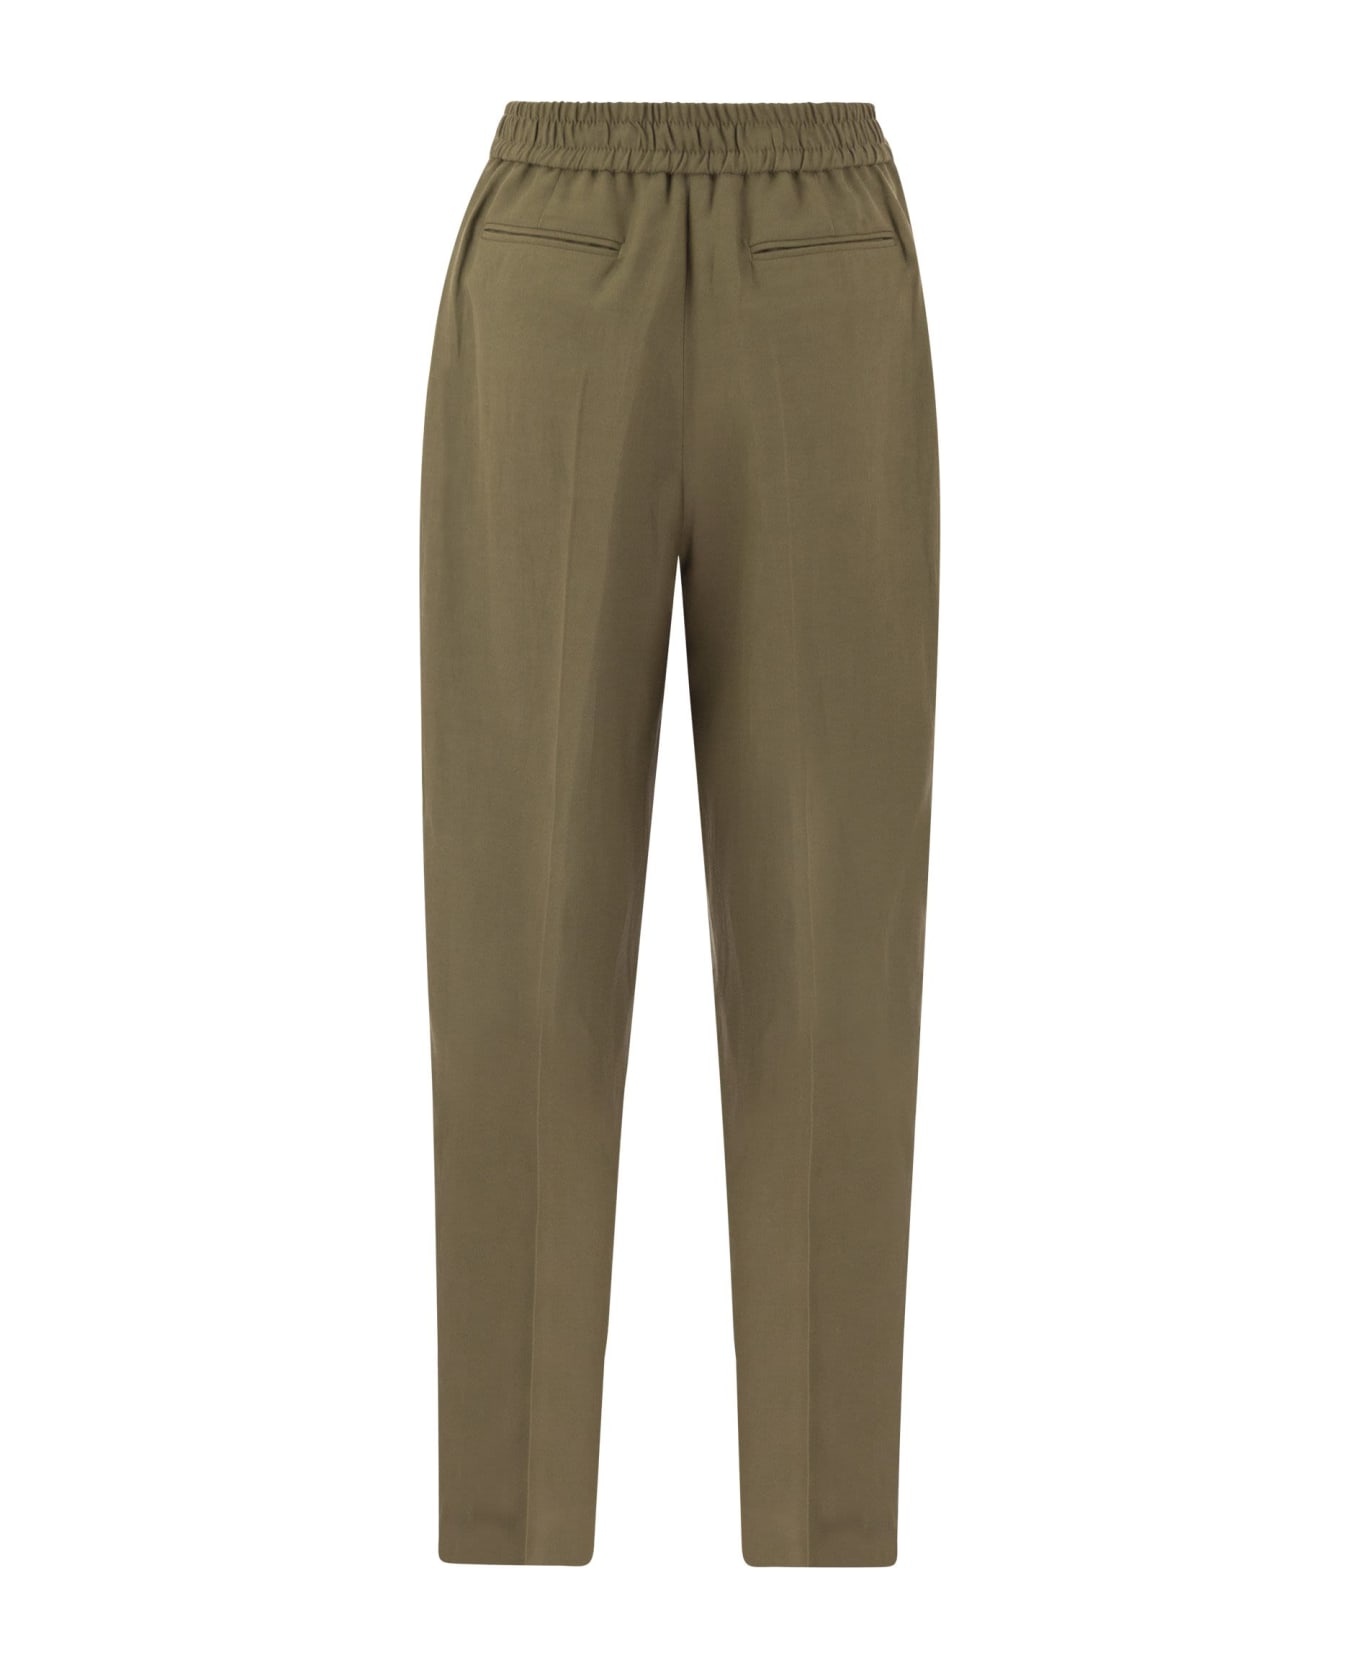 PT Torino Daisy - Viscose And Linen Browns Trousers - Khaki